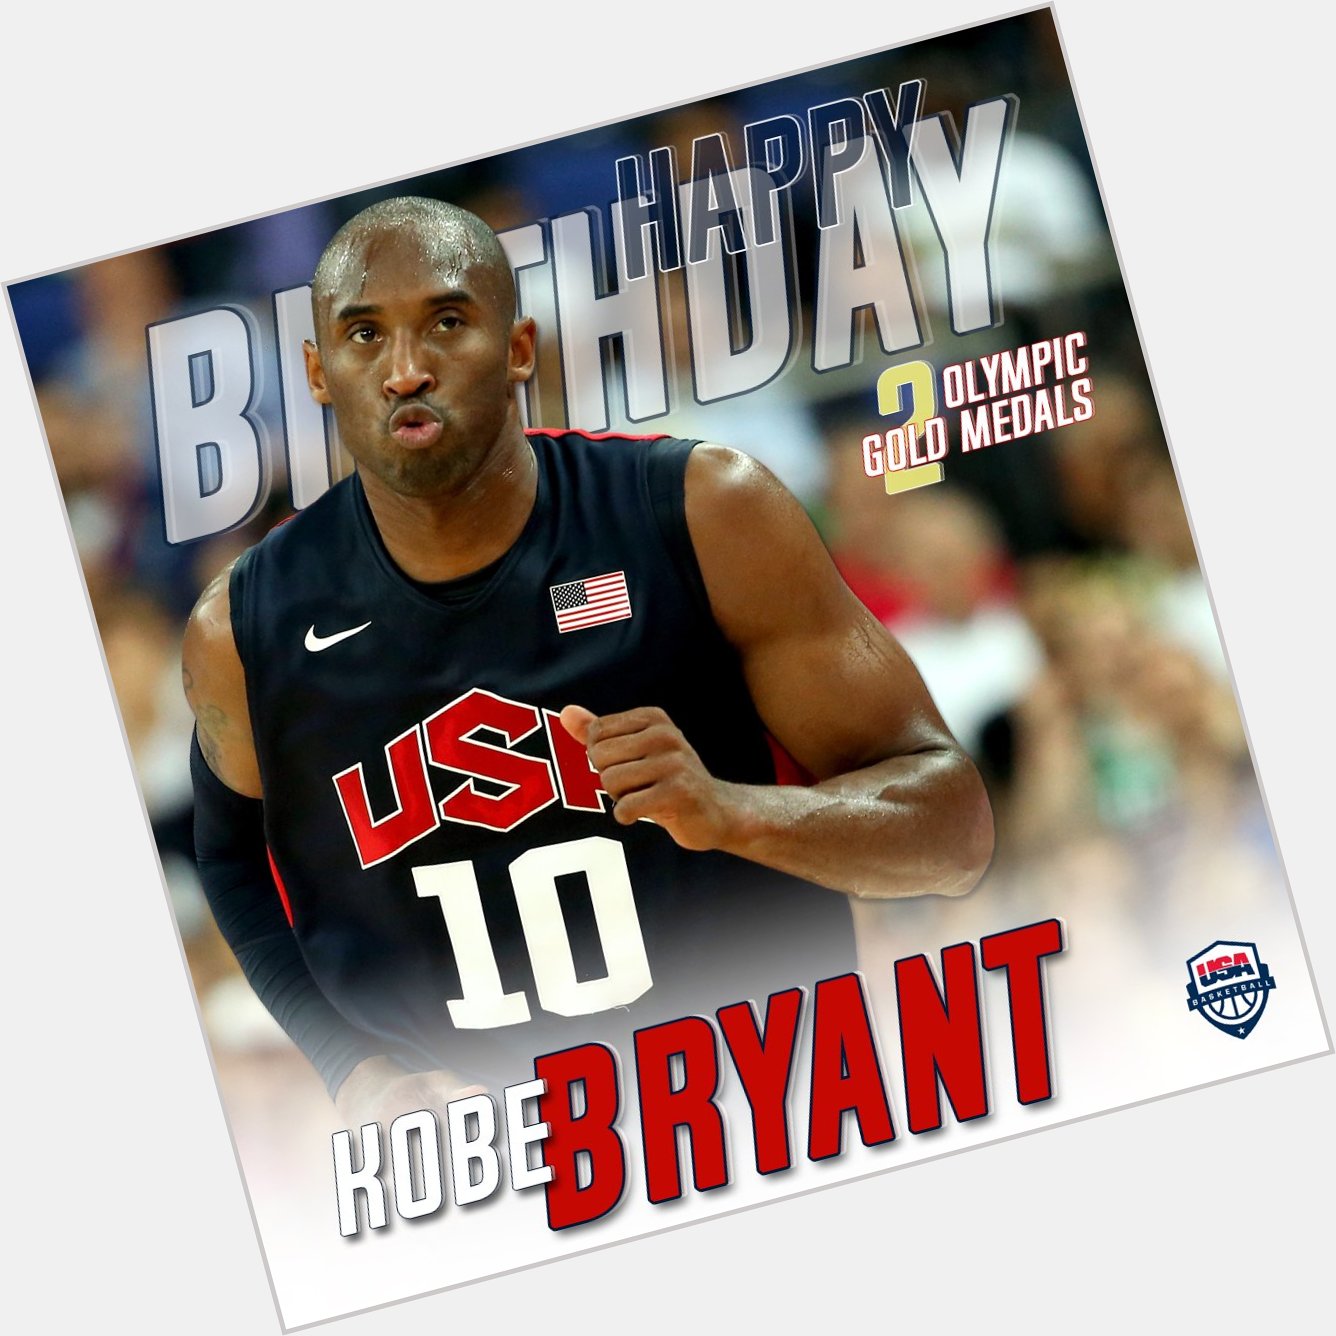 Wishing a happy birthday to 2 x Olympic gold medalist Kobe Bryant!   